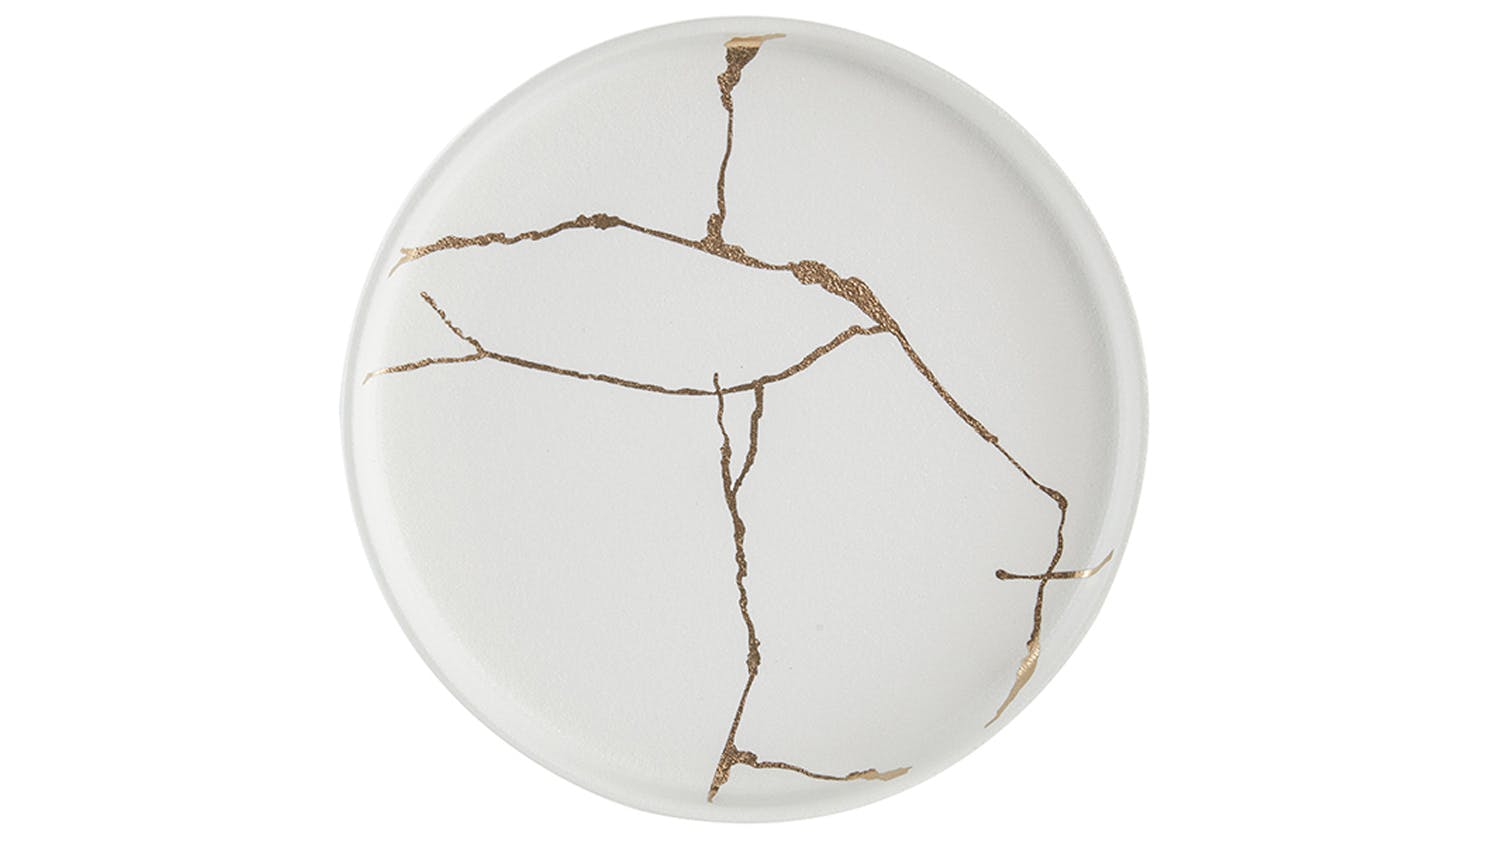 Kintsugi-Look Cream Porcelain Plate